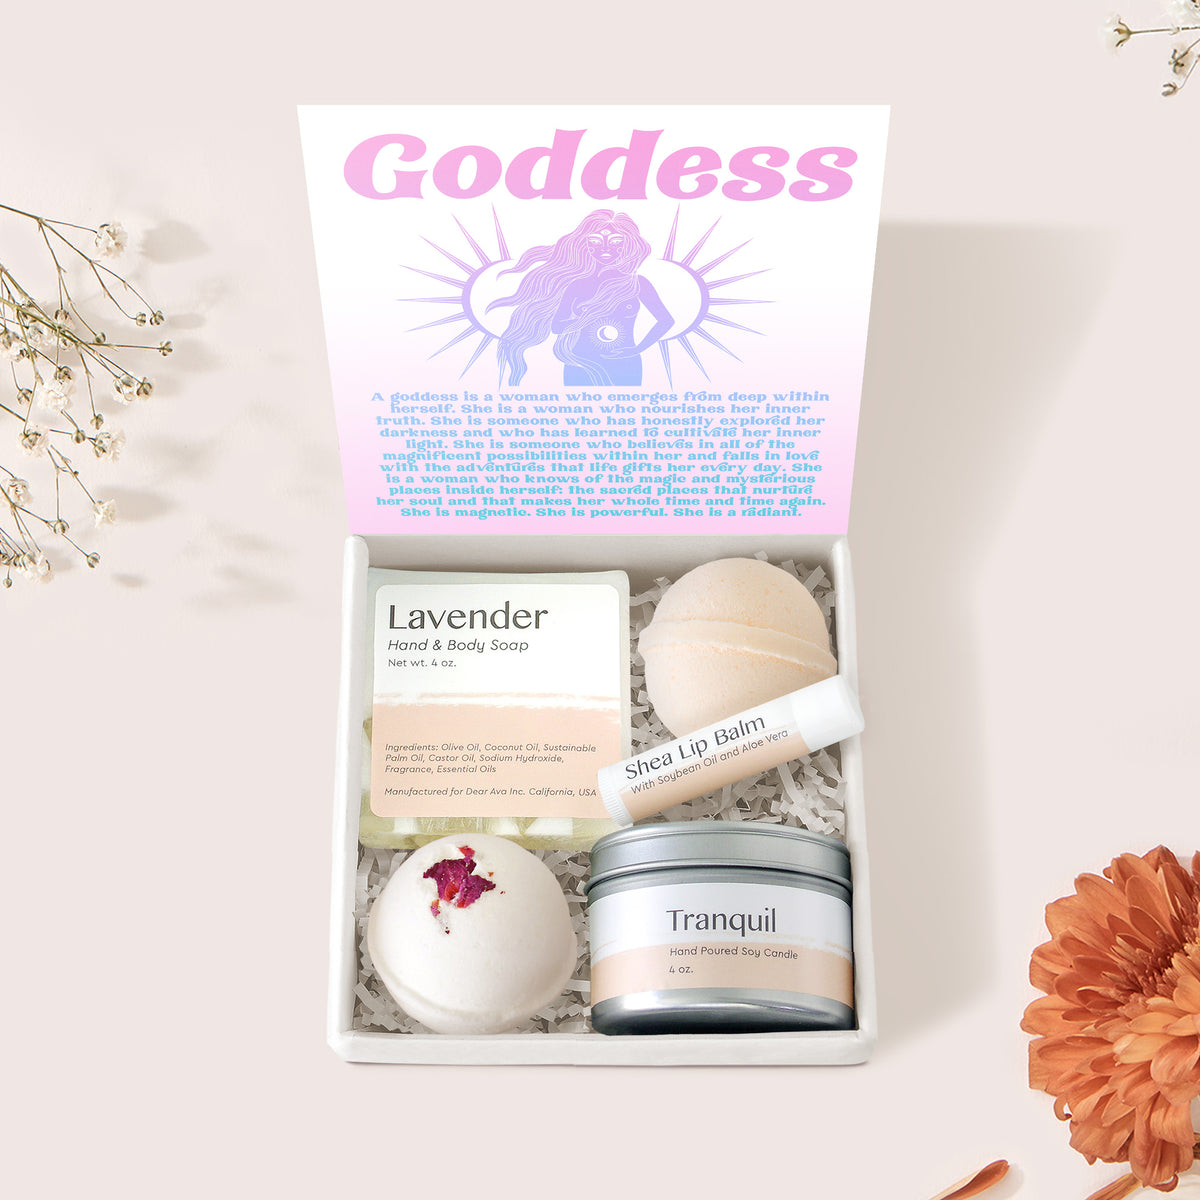 Goddess Compass Necklace Gift Box Set